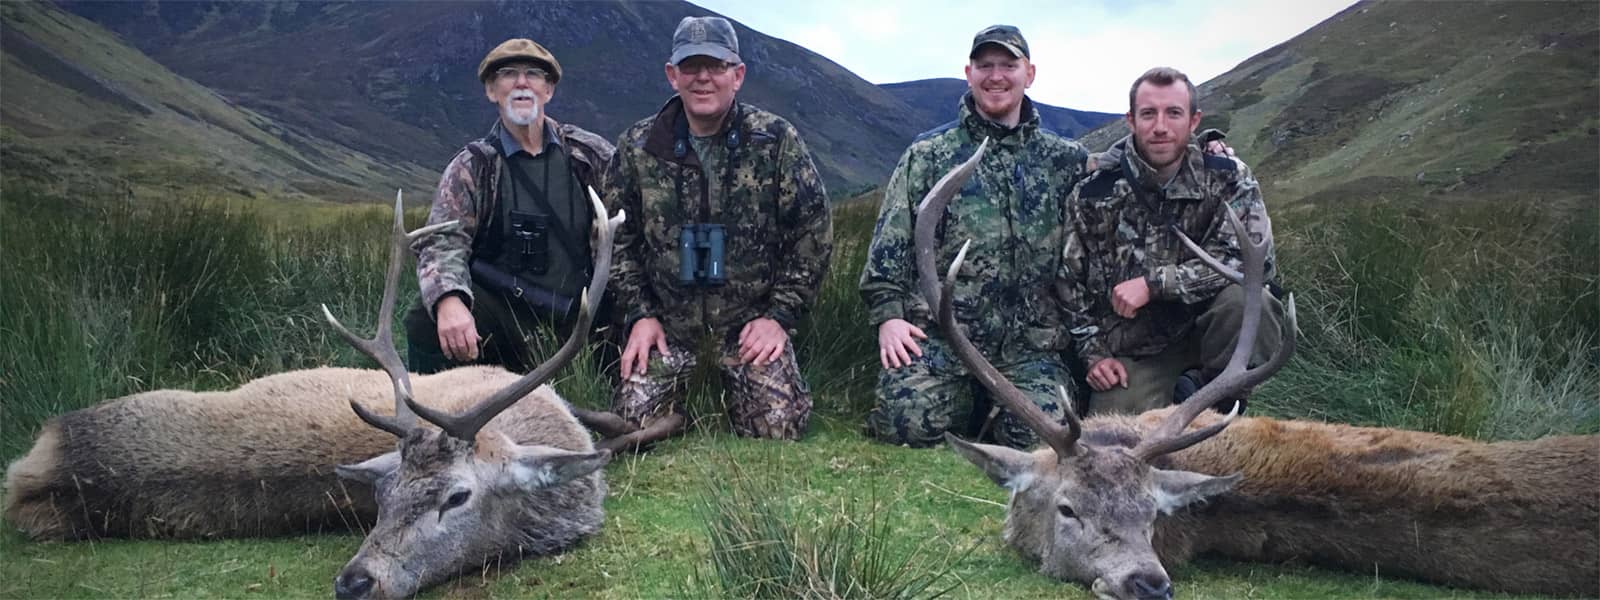 Stag Hunting highlands Scotland